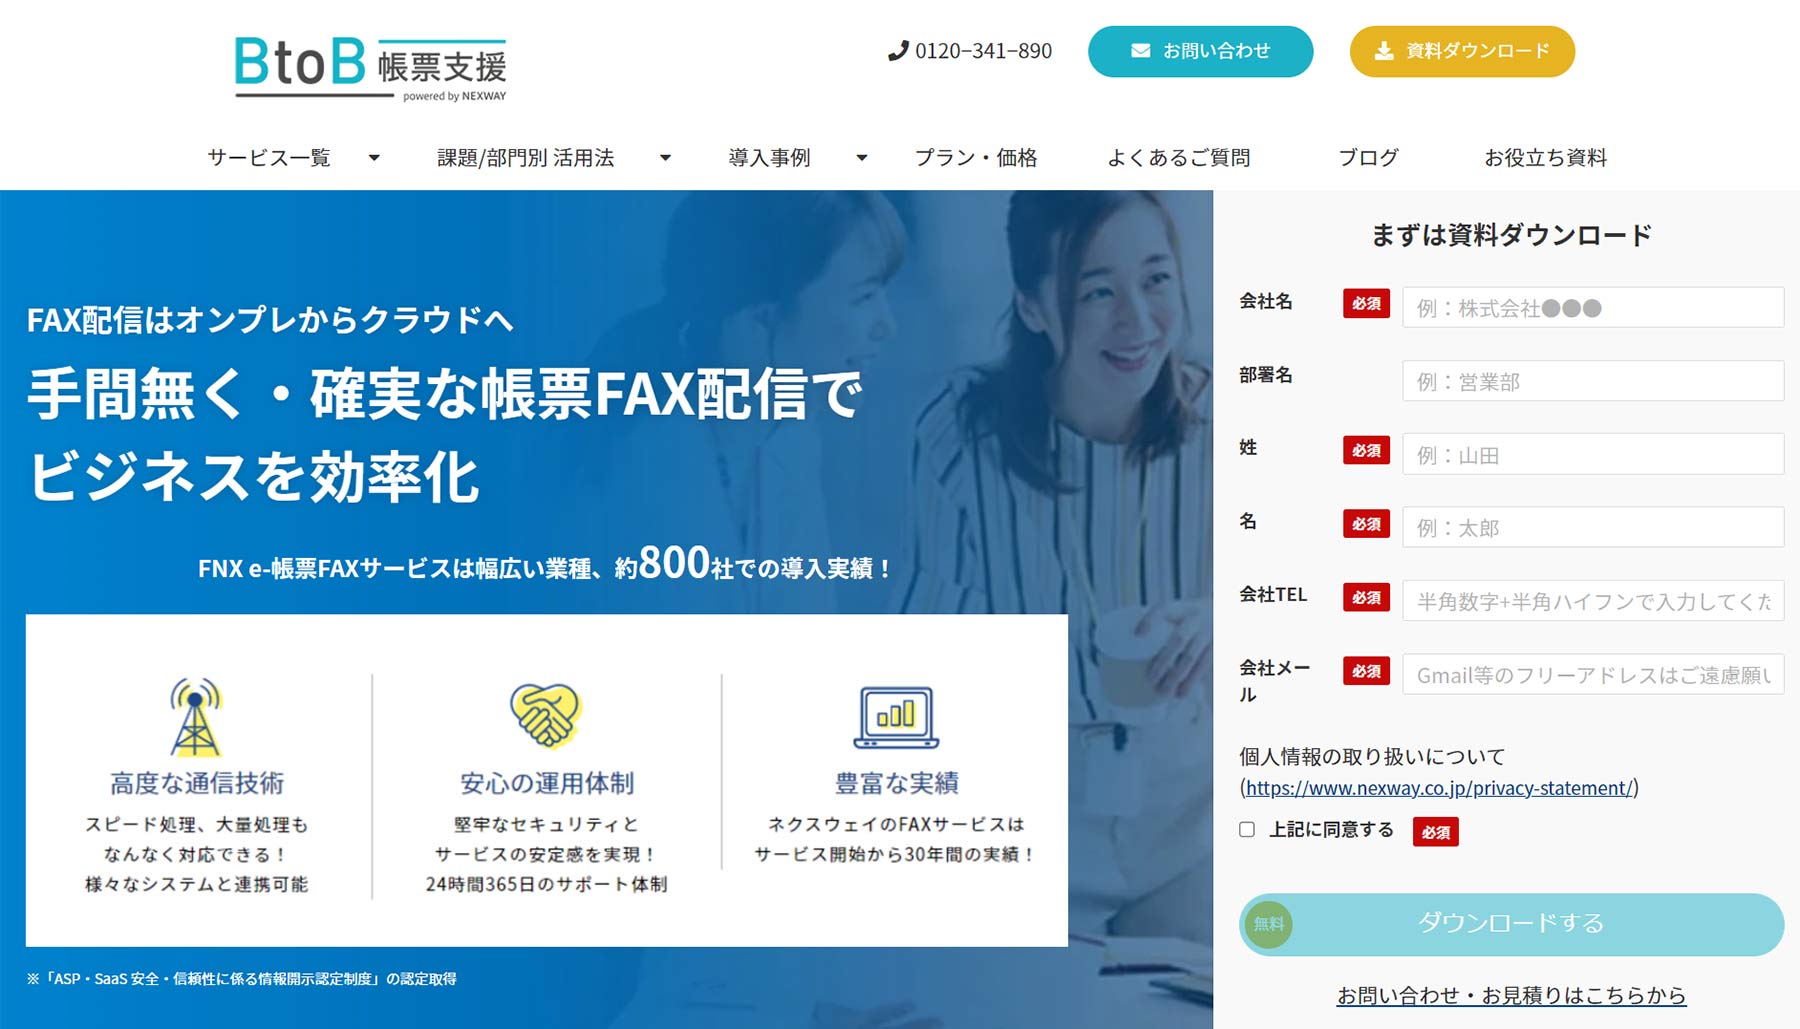 FNX e-帳票FAXサービス公式WEBサイト